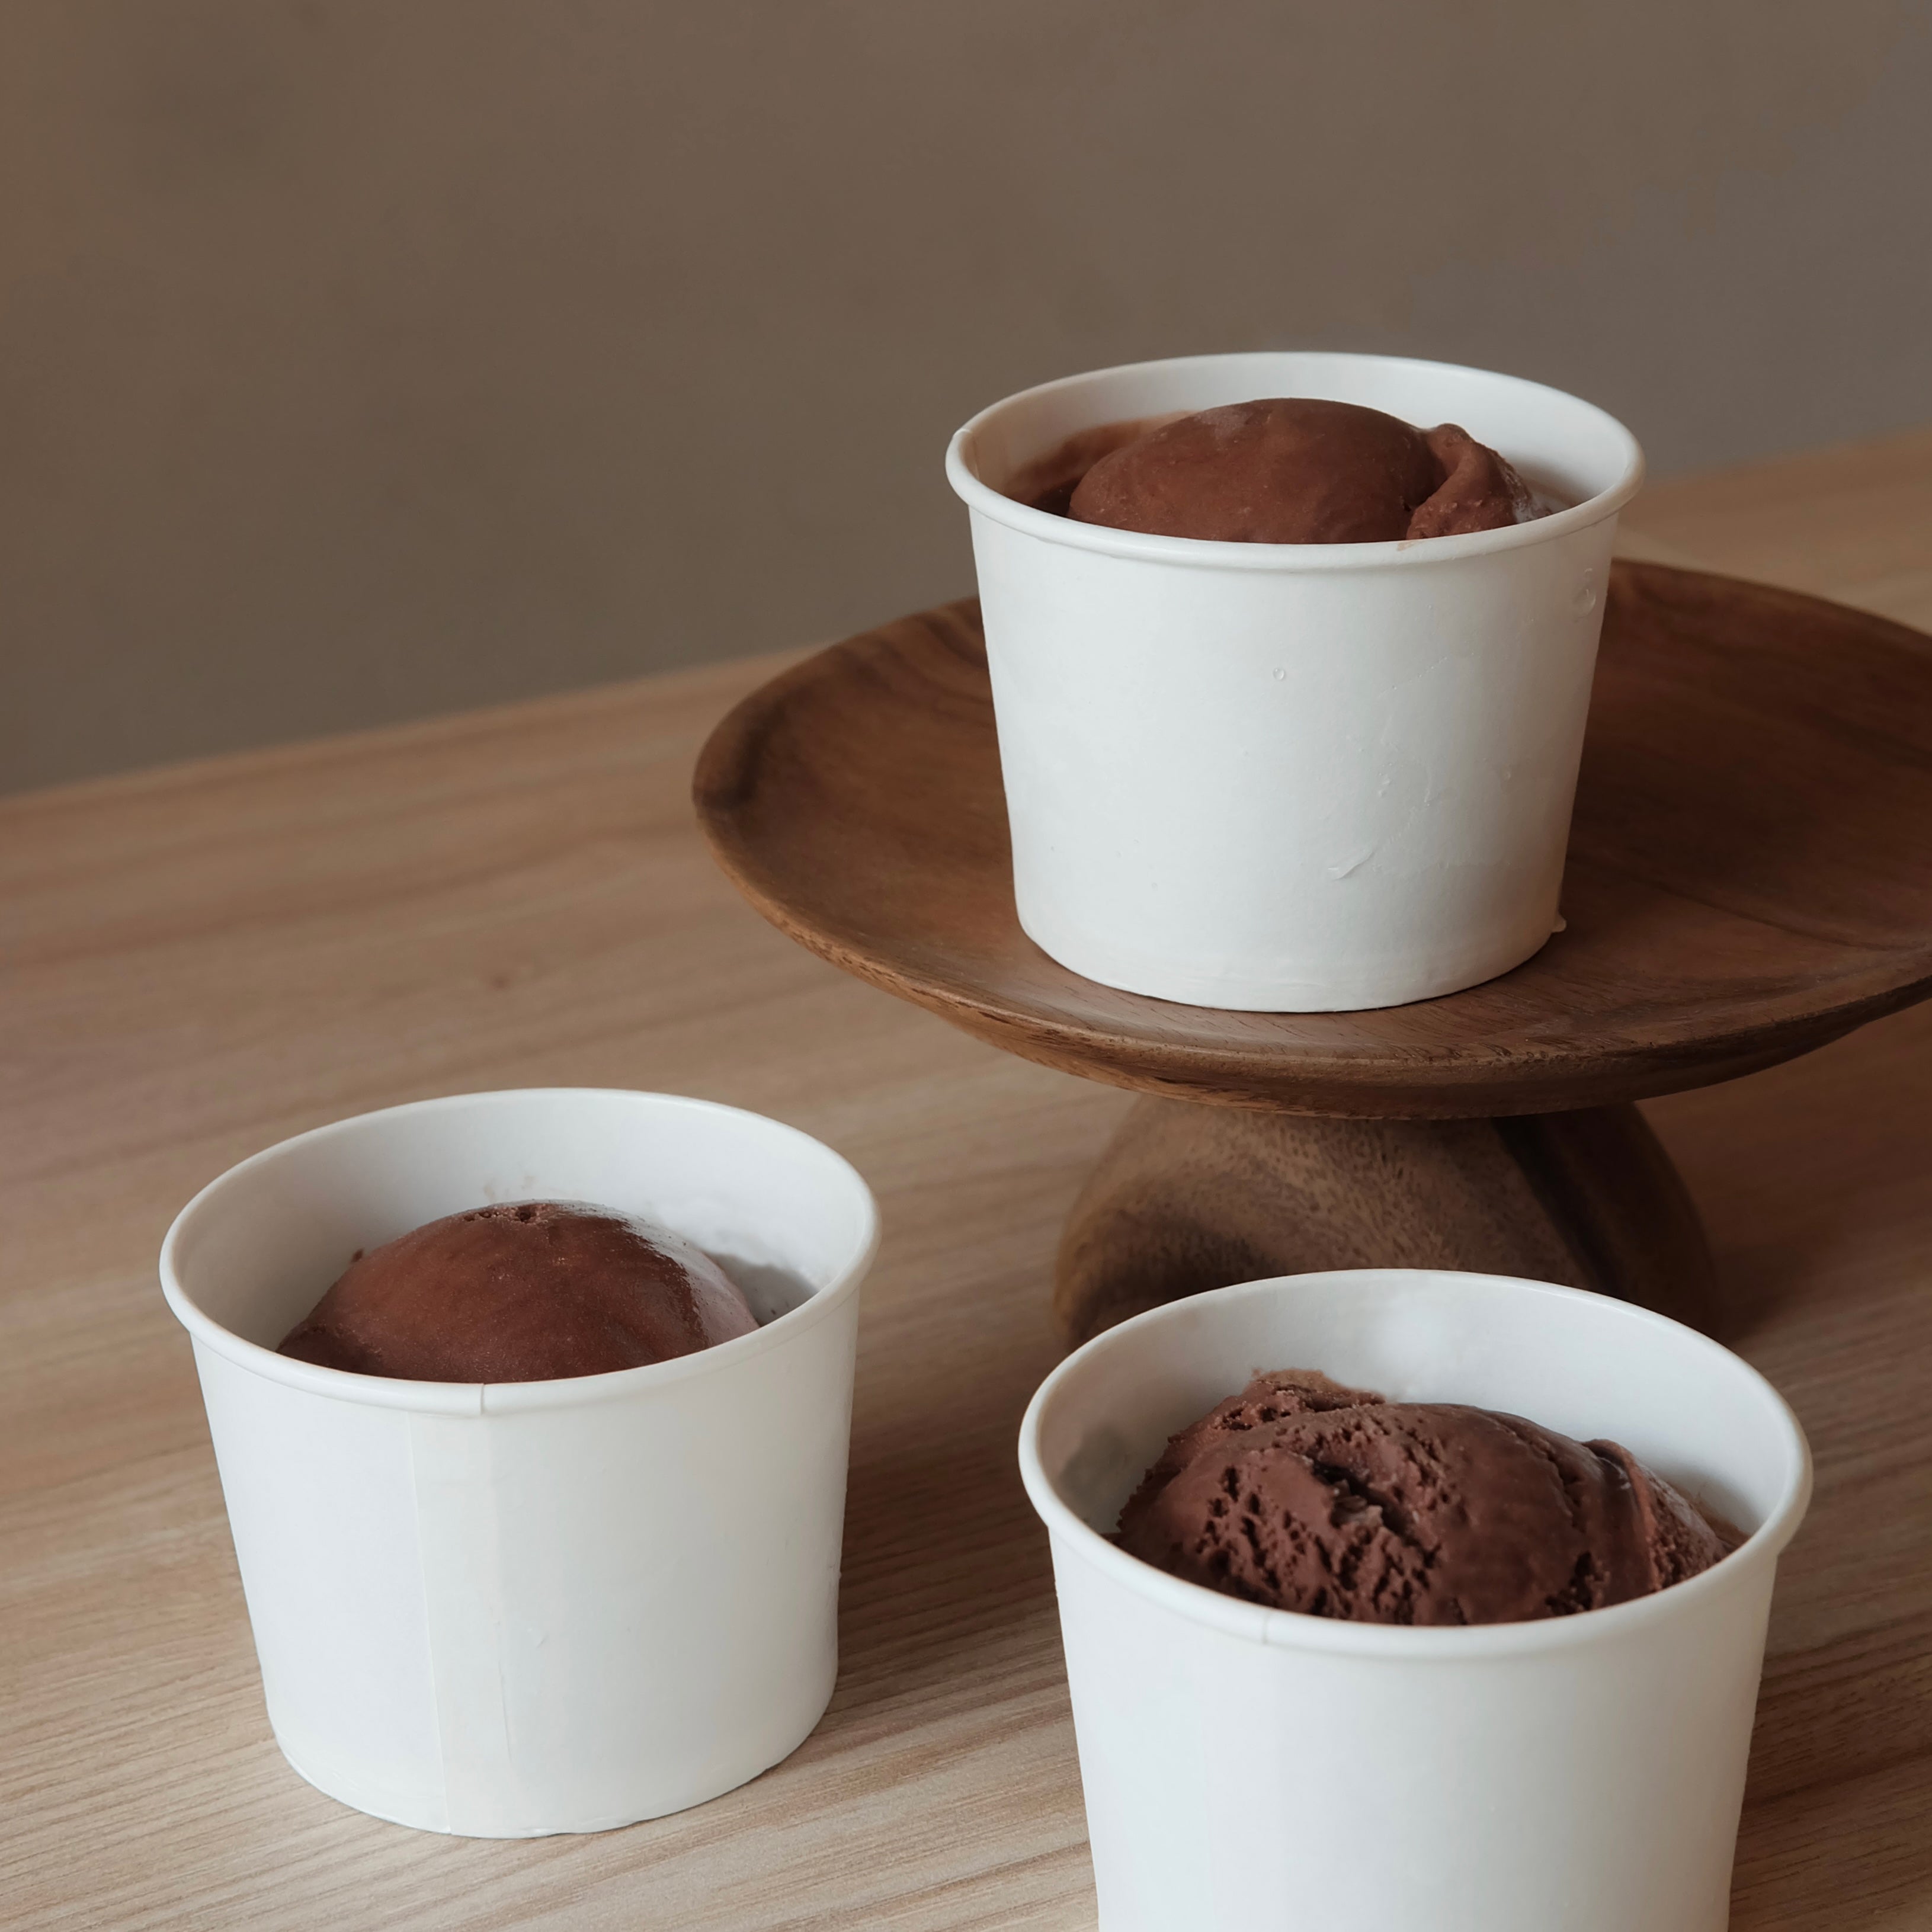 Plain Ole Chocolate Ice Cream Set: A Timeless Indulgence